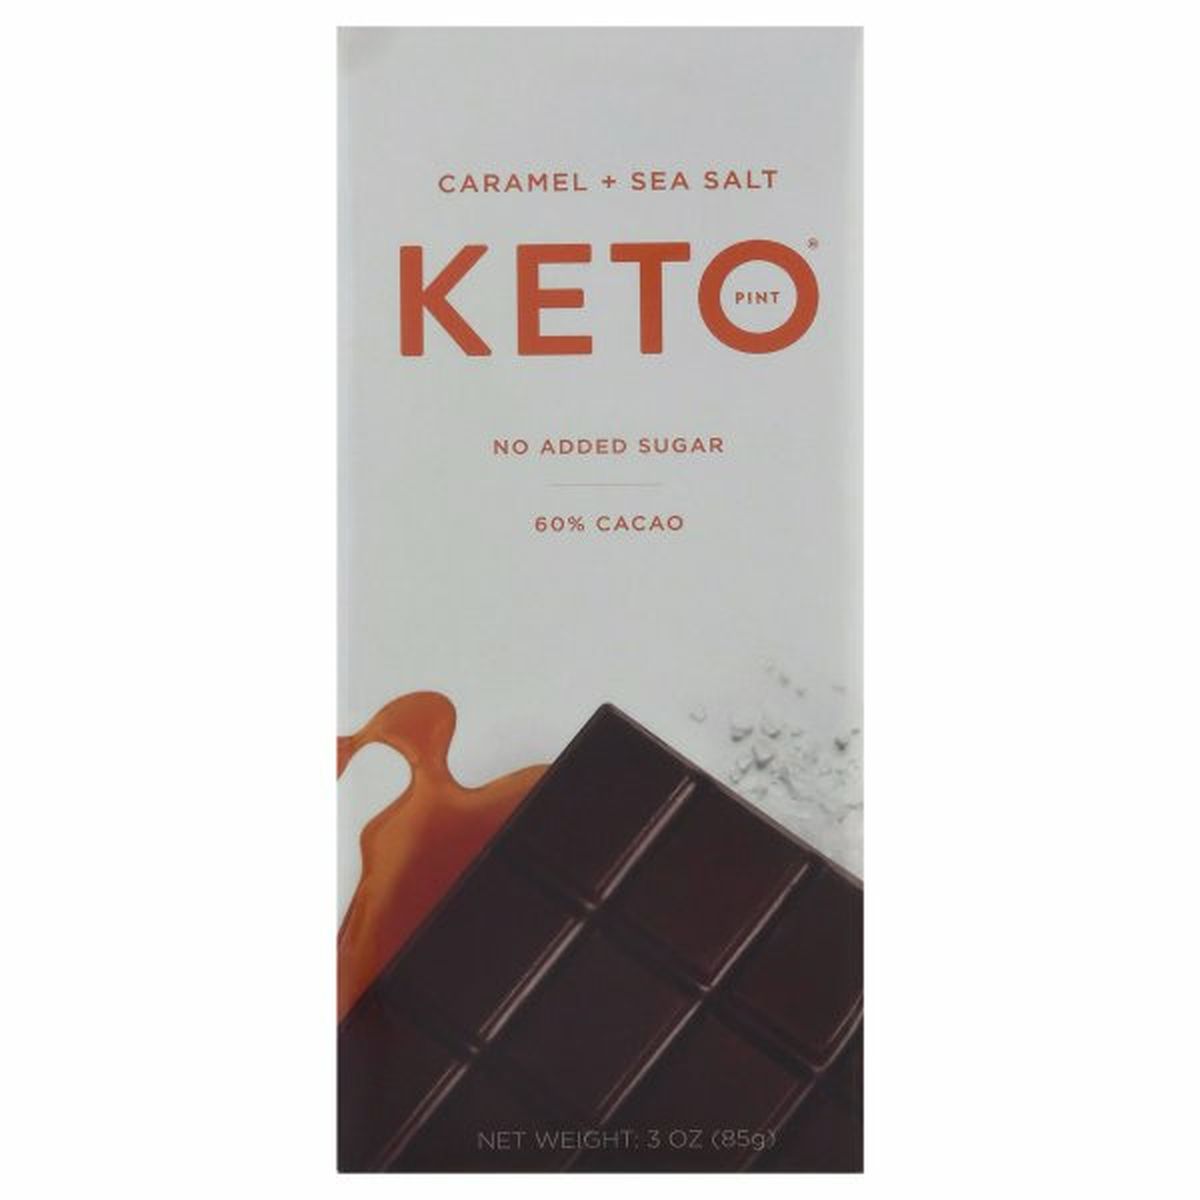 Calories in Keto Pint Chocolate, Caramel + Sea Salt, 60% Cacao